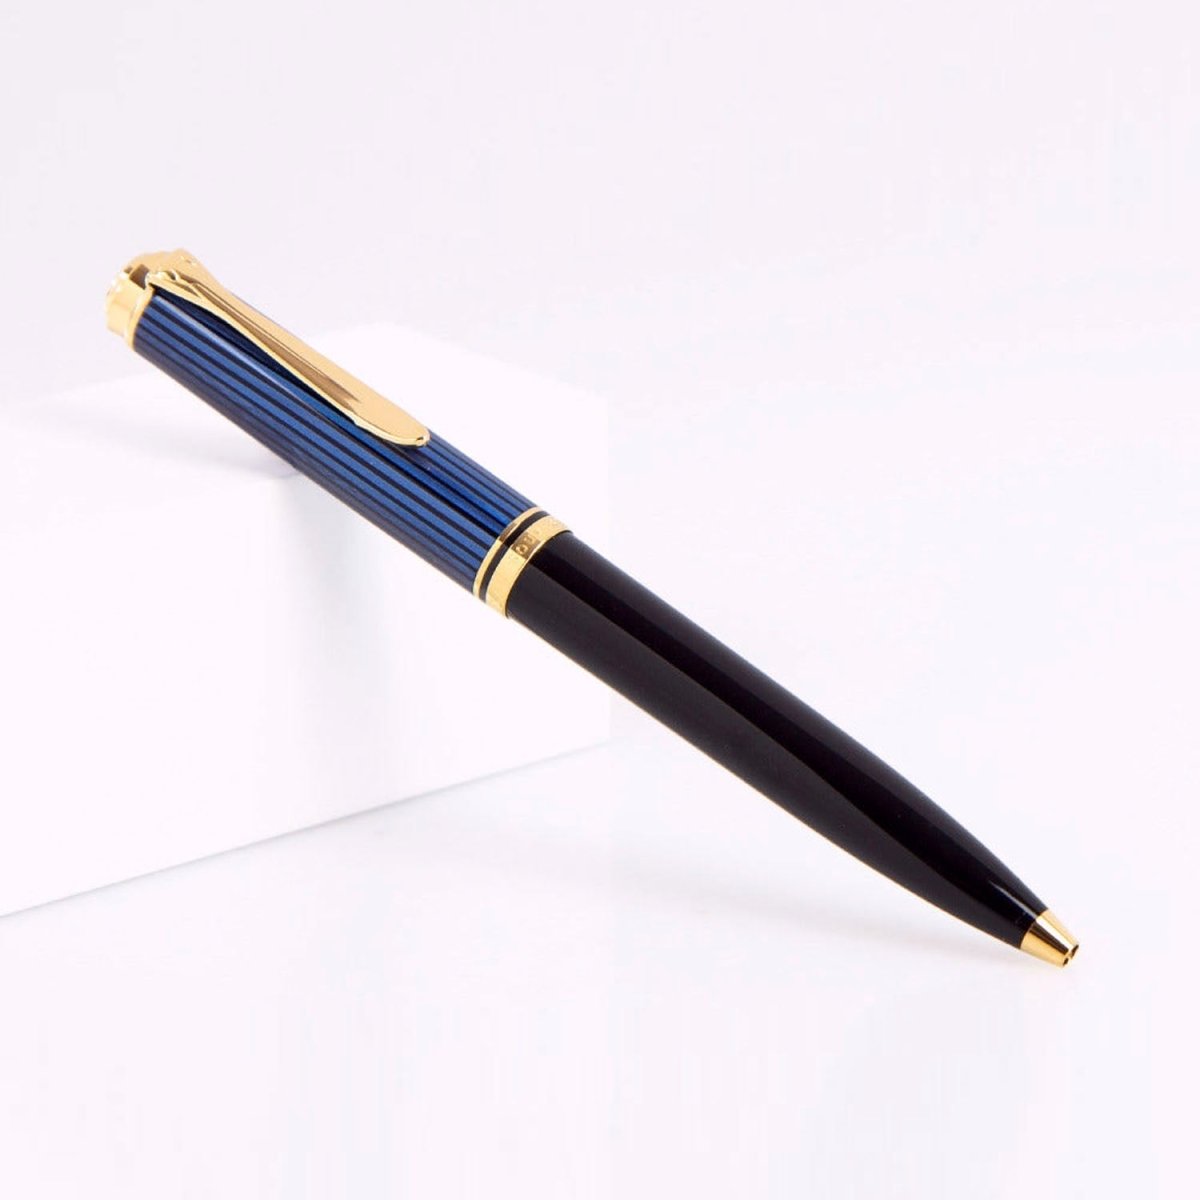 Pelikan Souveran K600 Black/Blue Ballpoint Pen 988378 - SCOOBOO - PEP_SVRN_K600_BLKBLU_BP_988378 - Ballpoint Pen